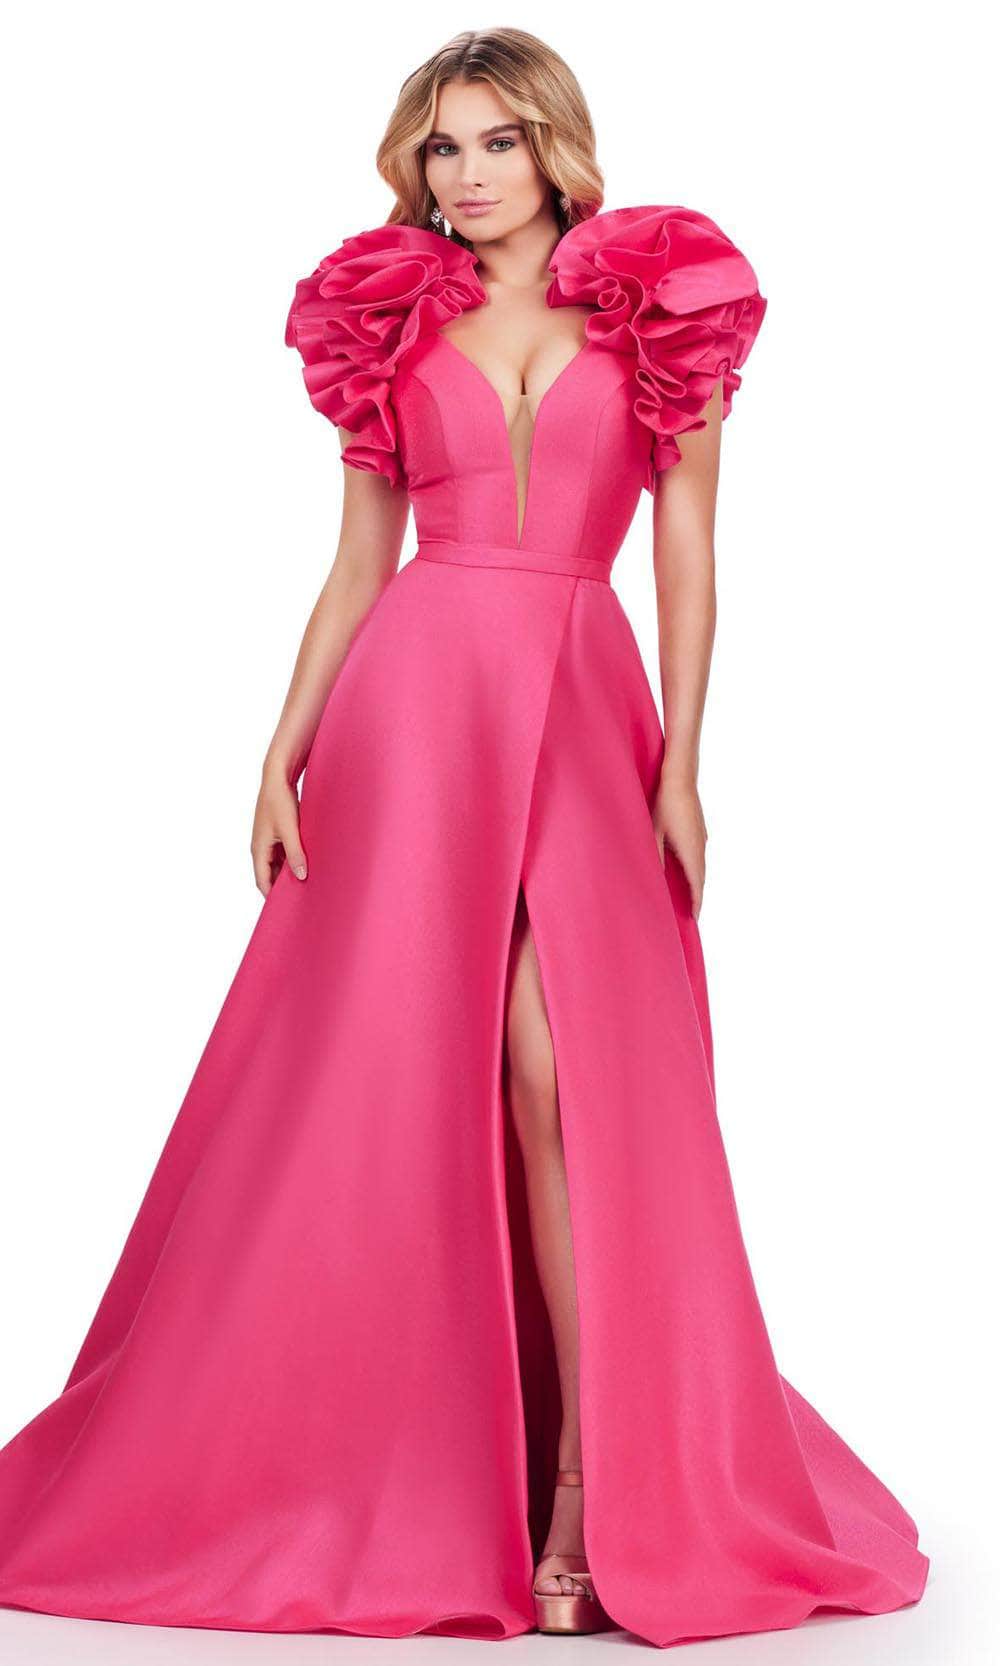 Ashley Lauren 11610 - Oversized Ruffle Prom Dress 00 /  Hot Pink